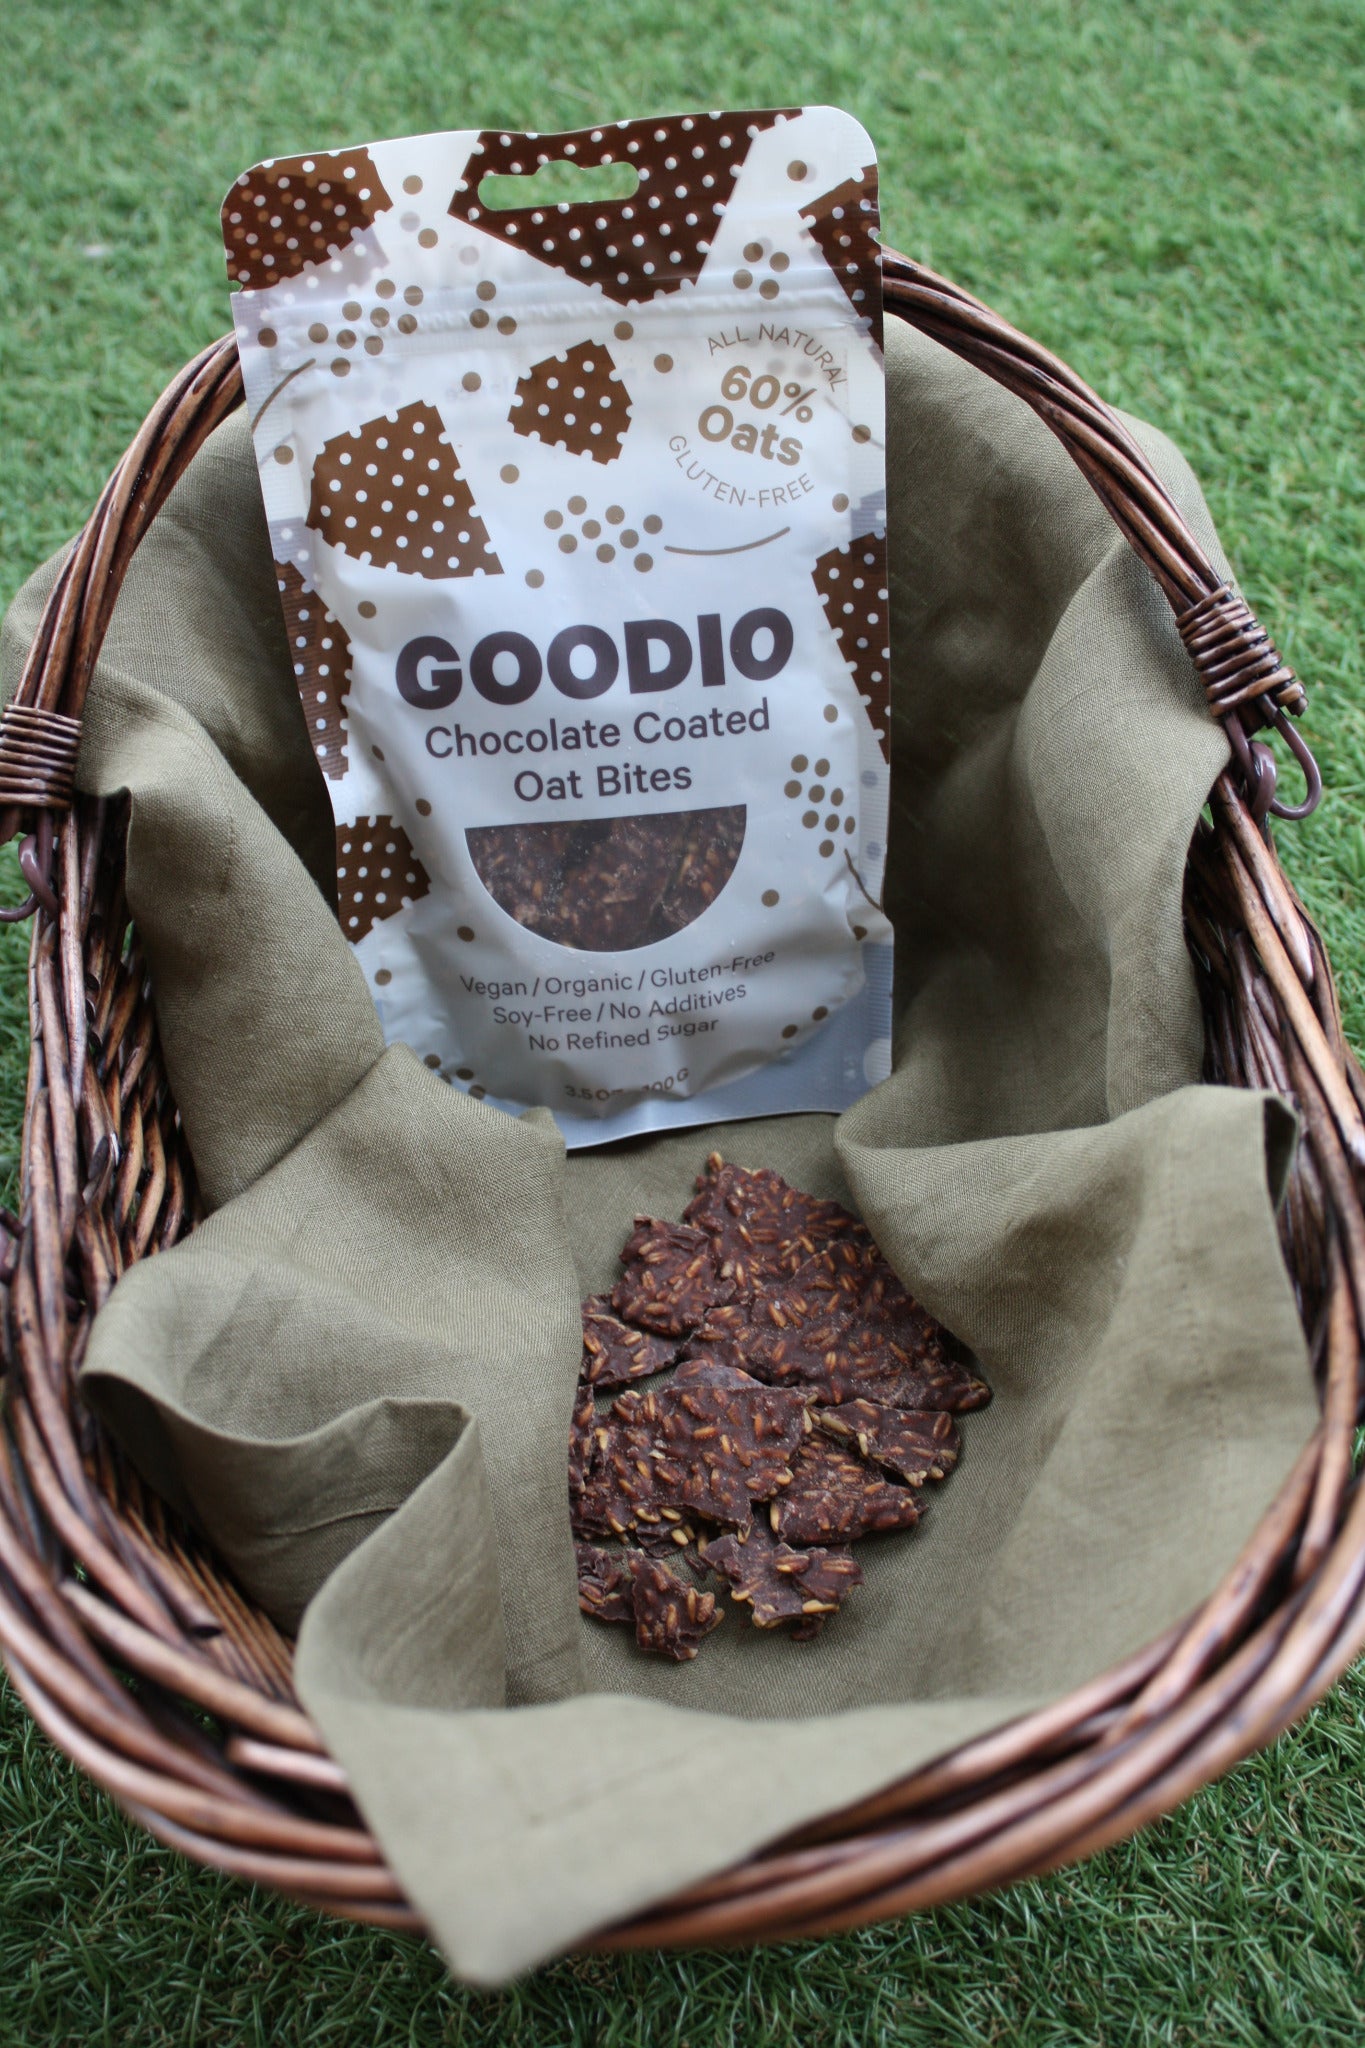 Goodio vegan chocolate coated oat bites snack